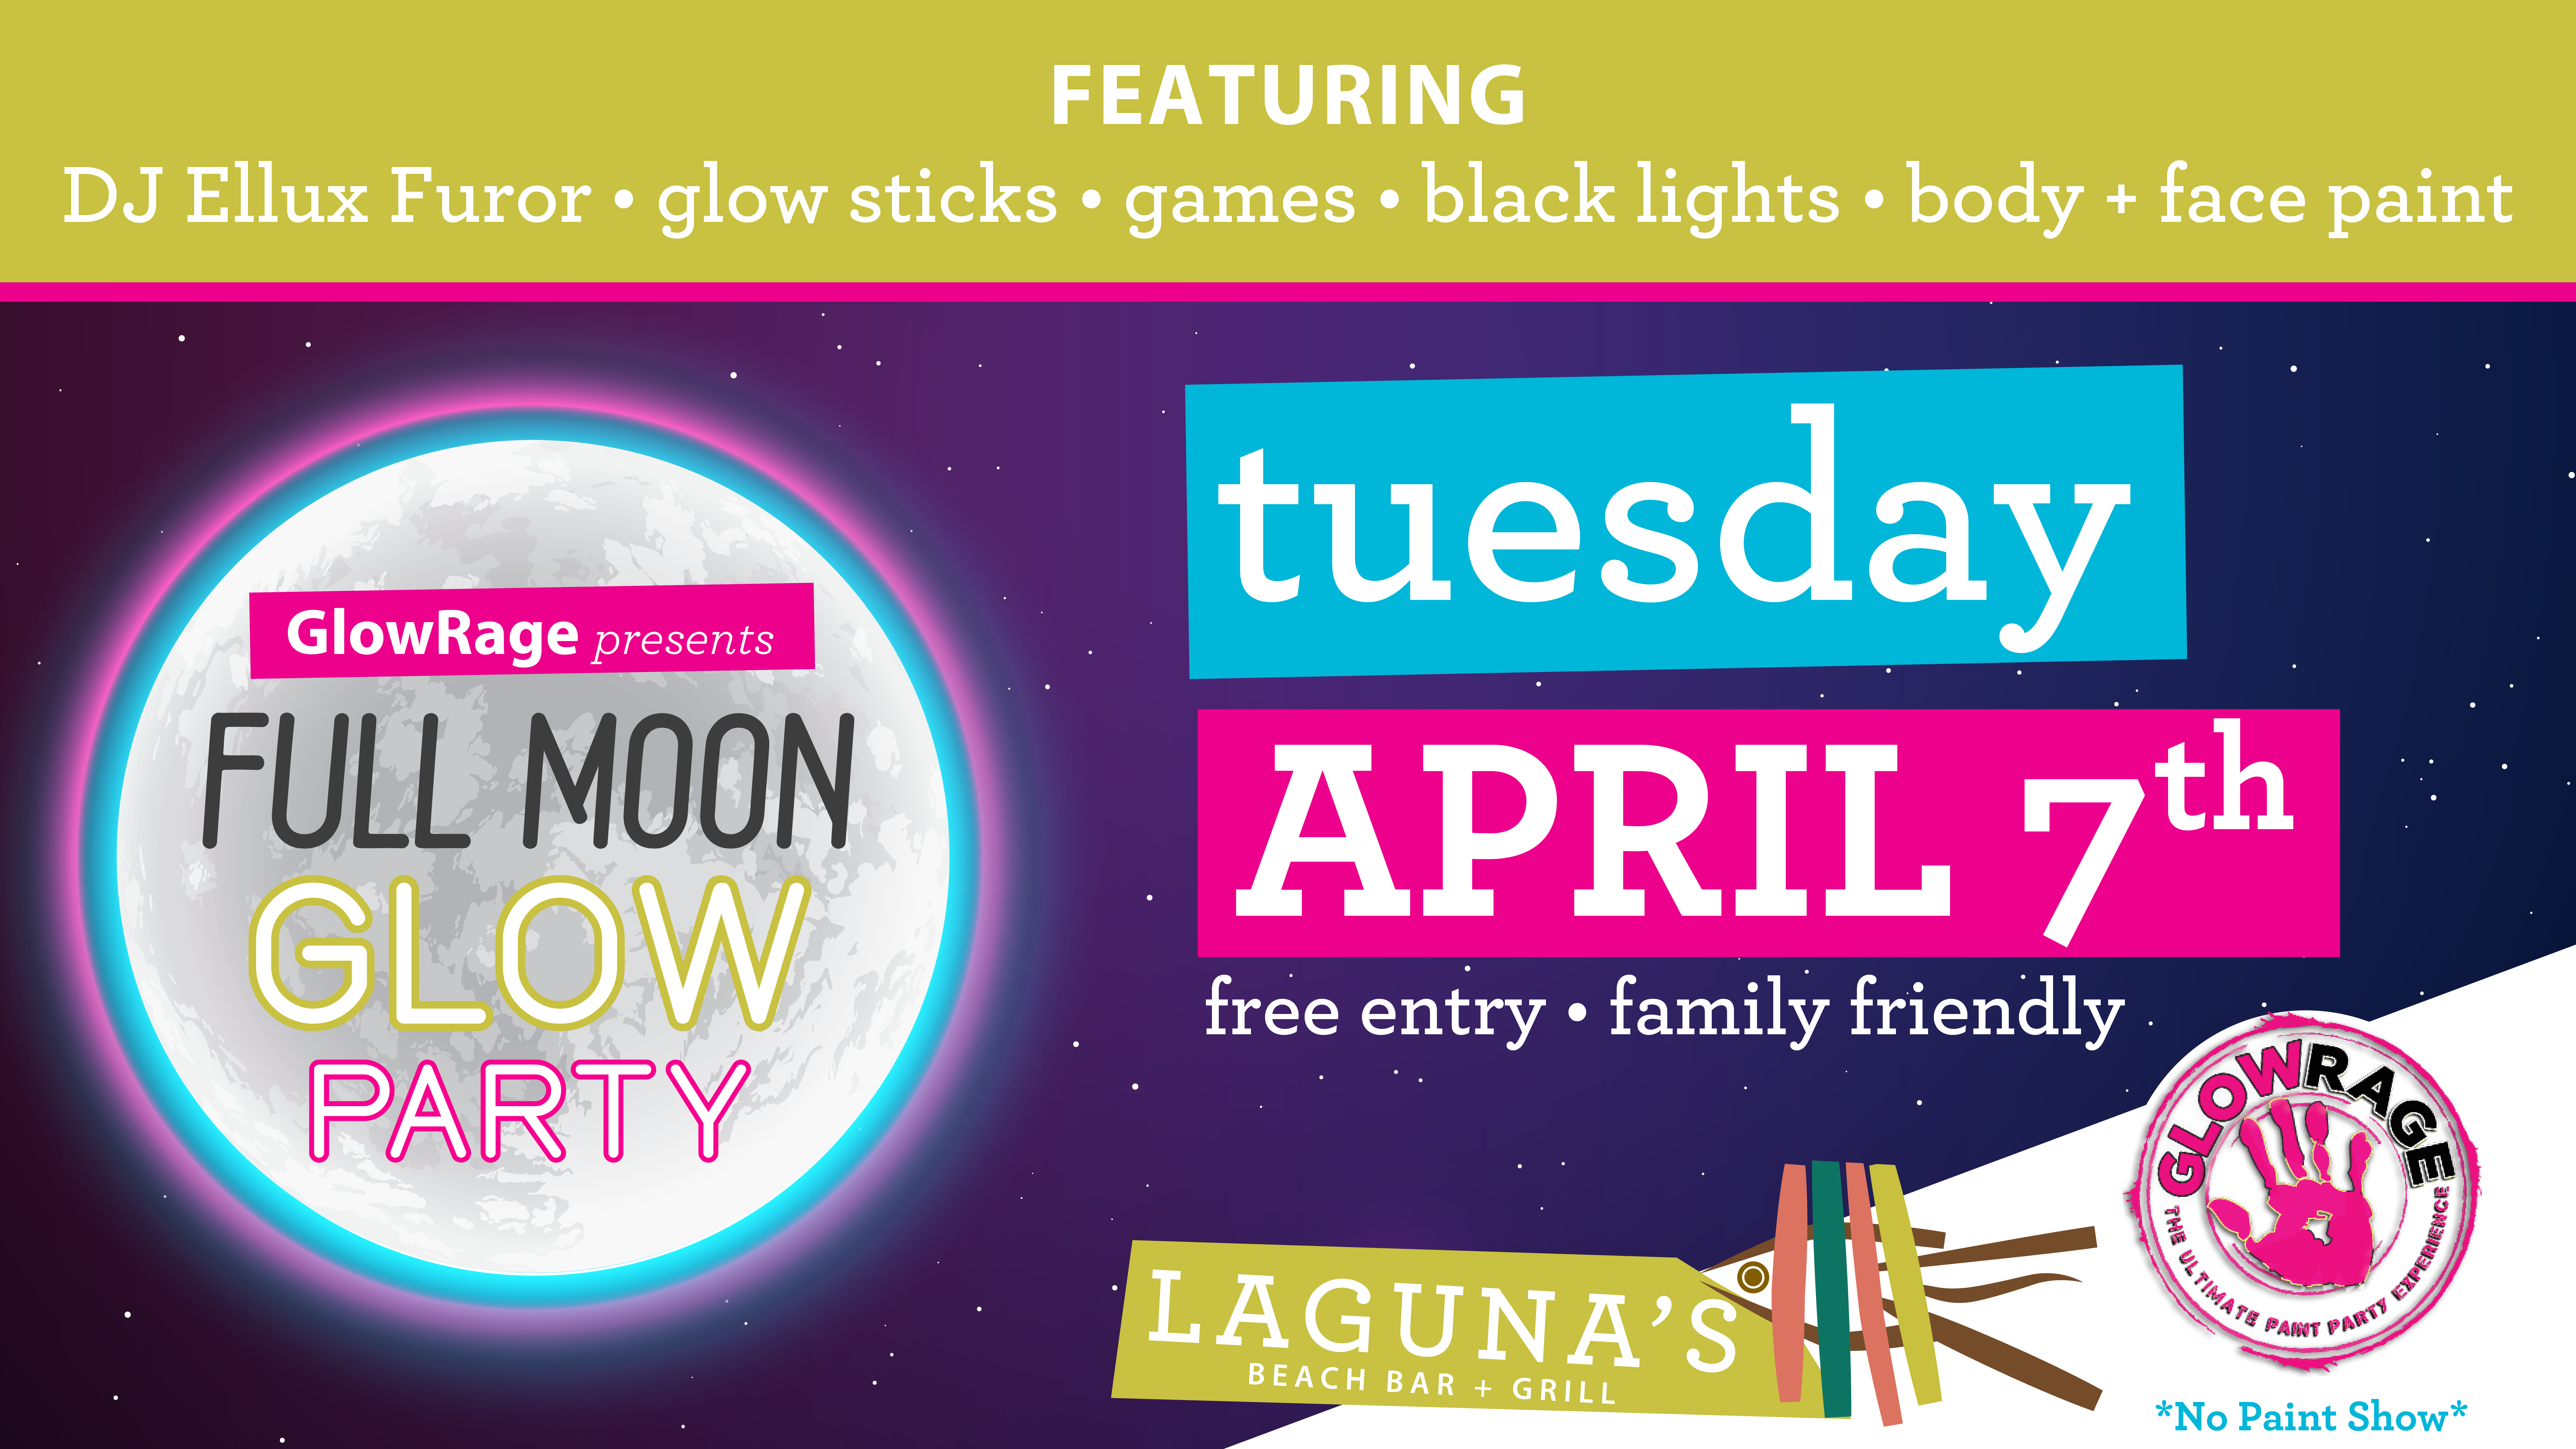 GlowRage presents: Full Moon GLOW Party at Laguna's